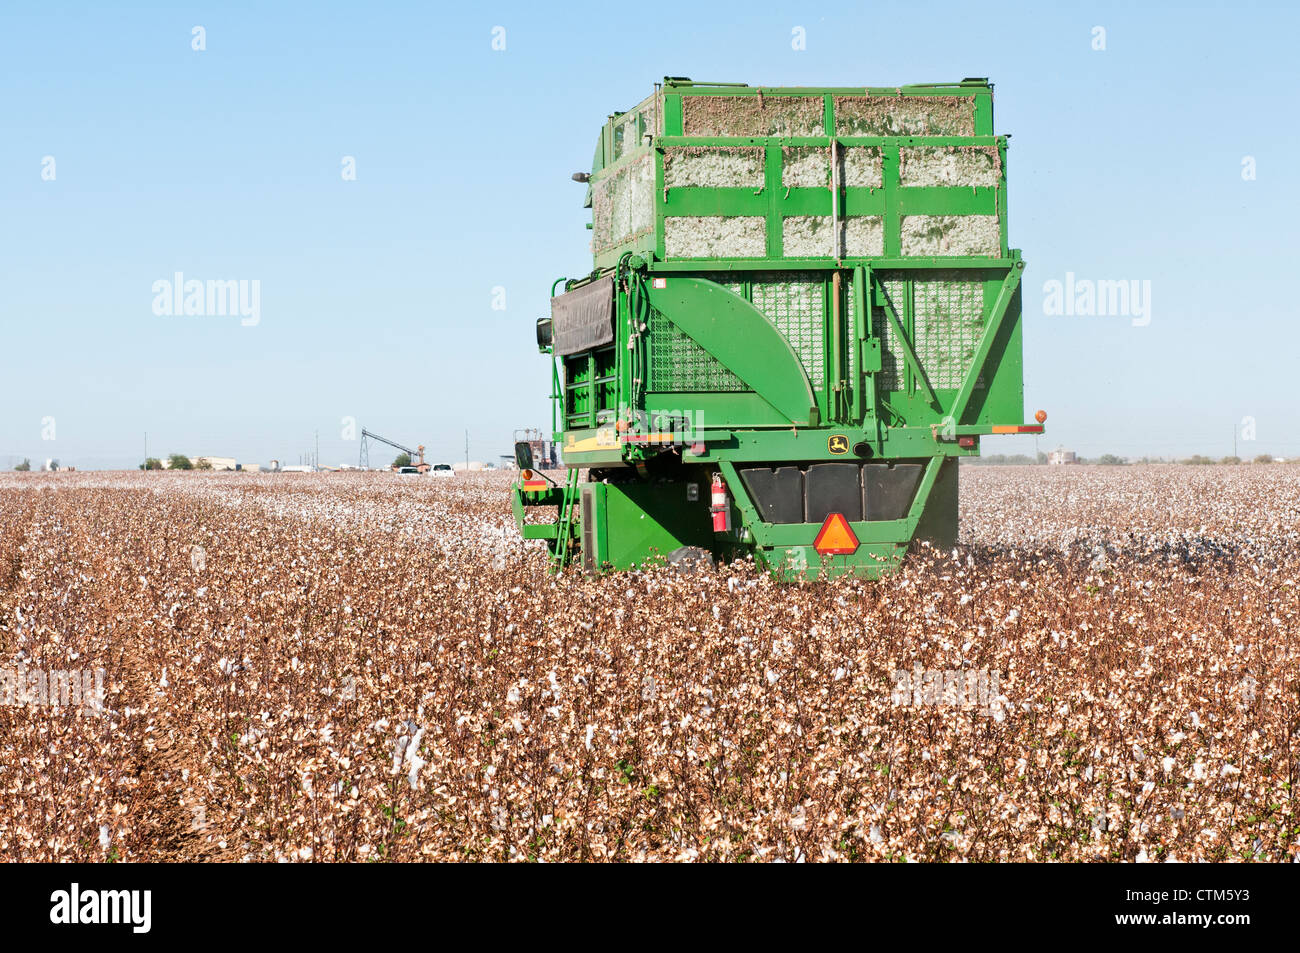 A cotton picker harvests defoliated cotton plants in a field in Arizona Stock Photo